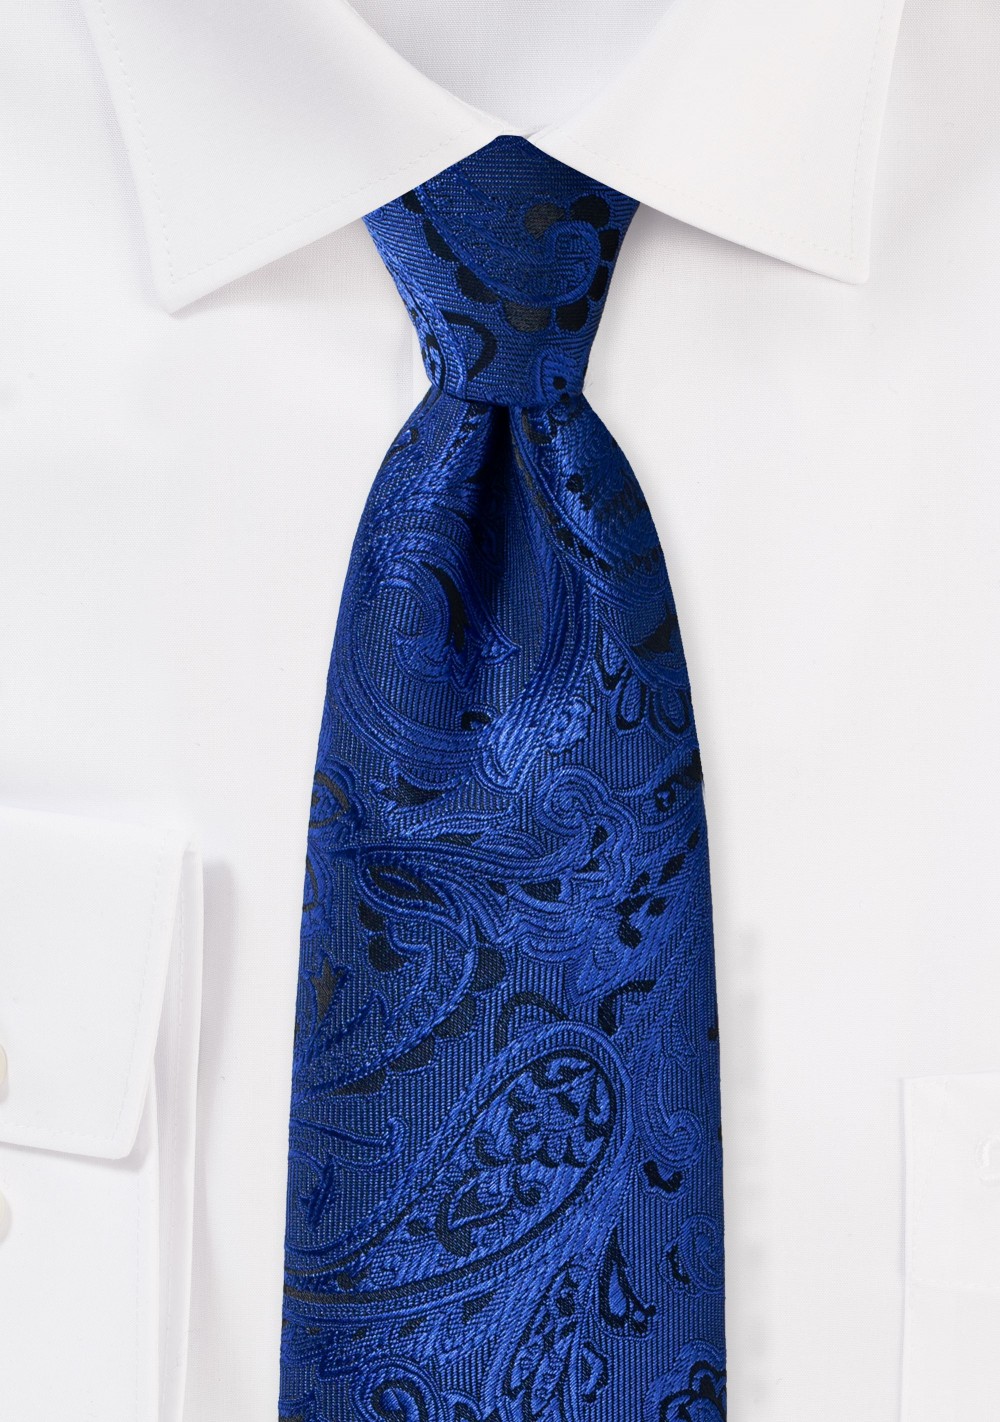 Formal Paisley Tie in Royal Blue